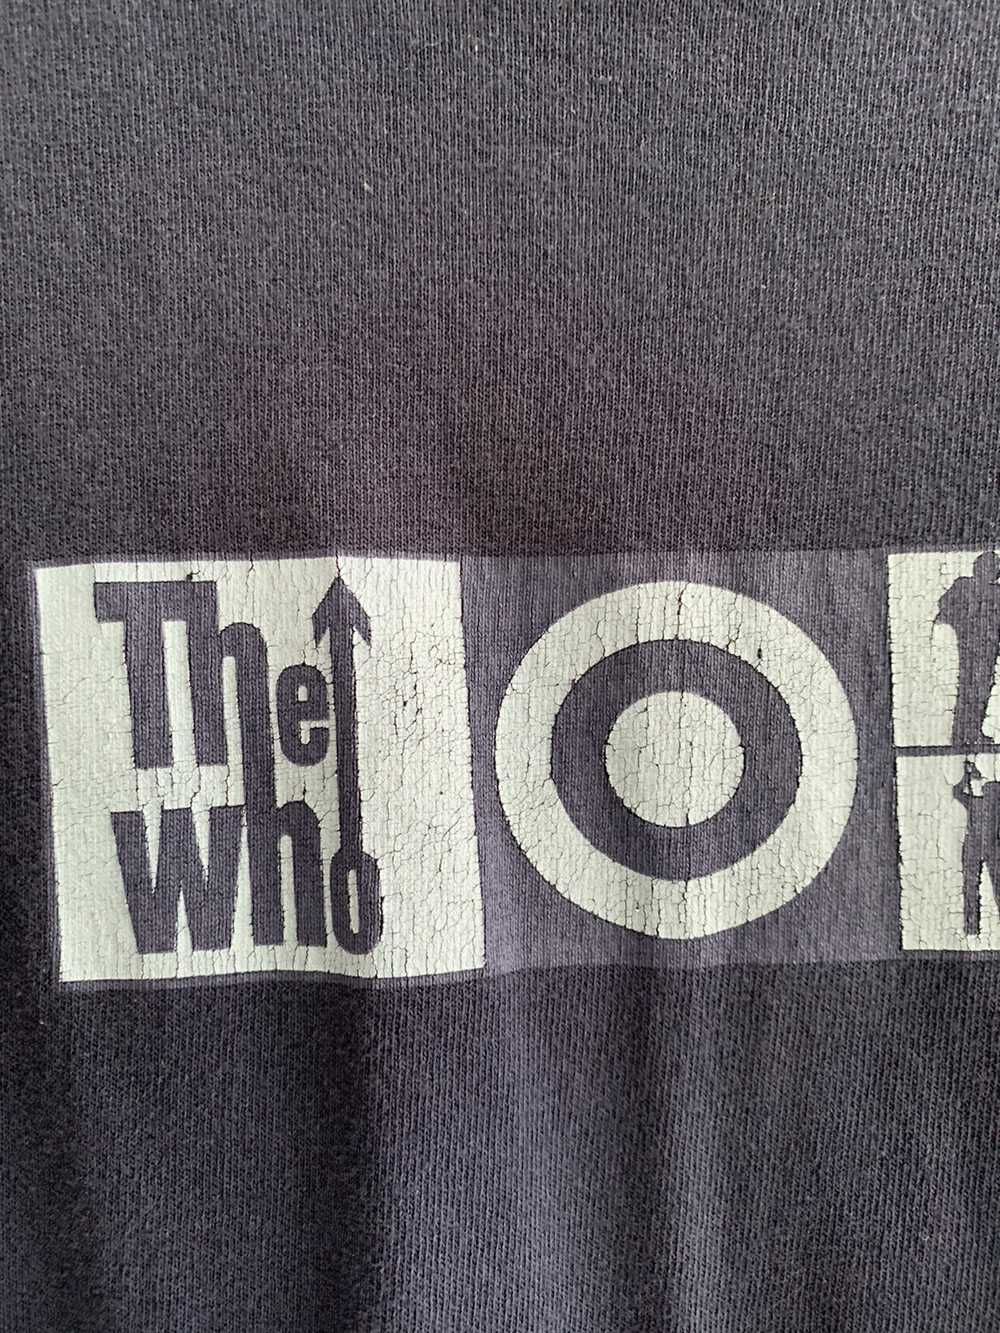 Band Tees × Vintage Vintage The Who Tour Tee - image 3